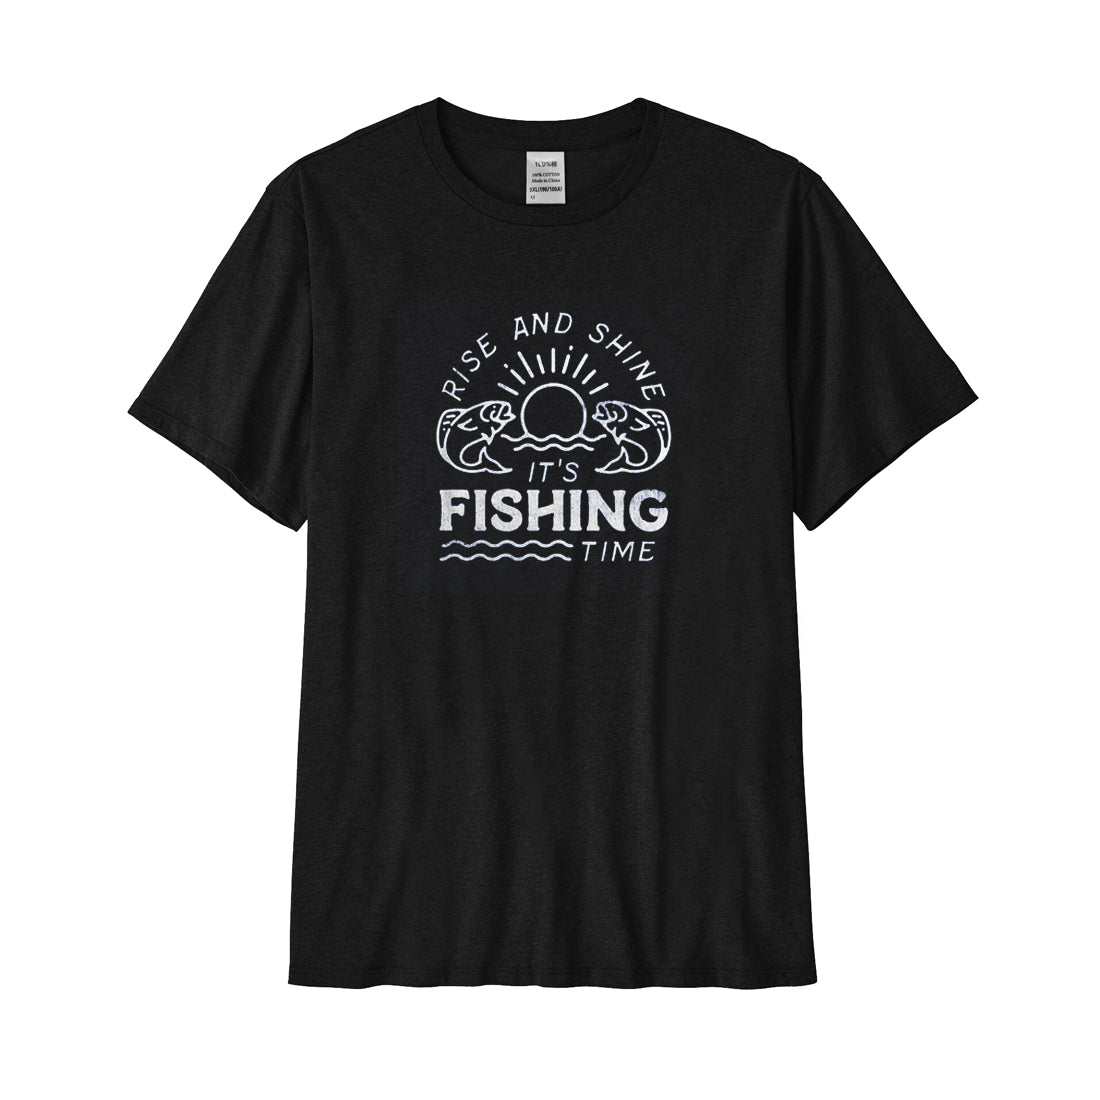 IT'S FISHING TIME Performance T-Shirt